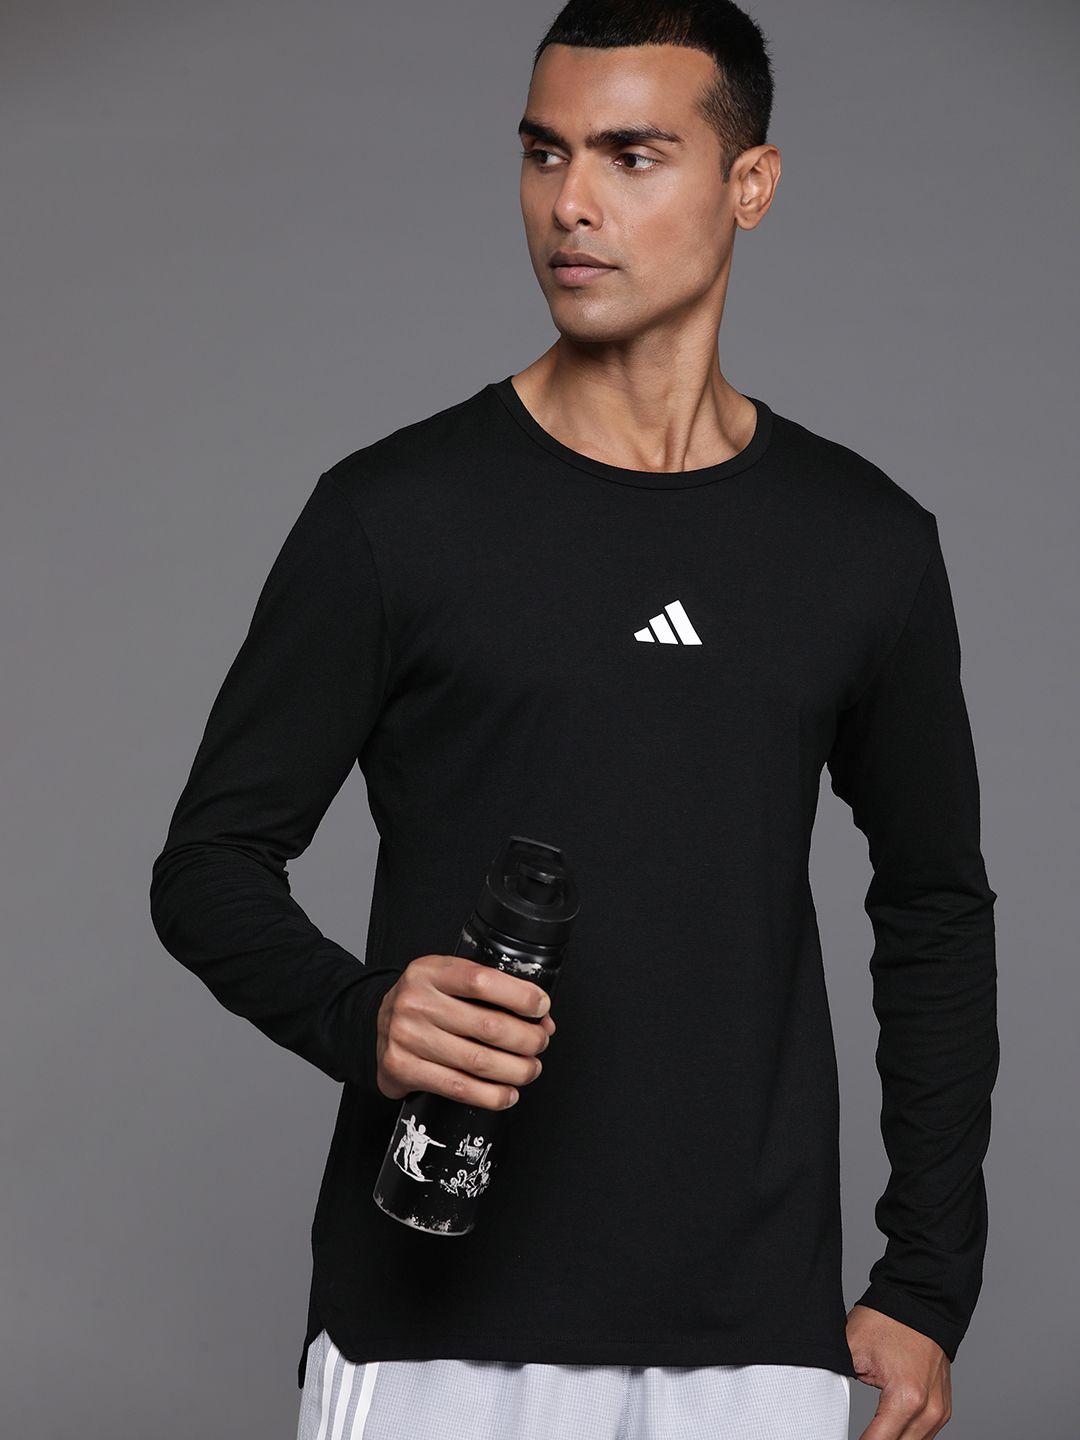 adidas brand logo printed slim fit workout long sleeves t-shirt